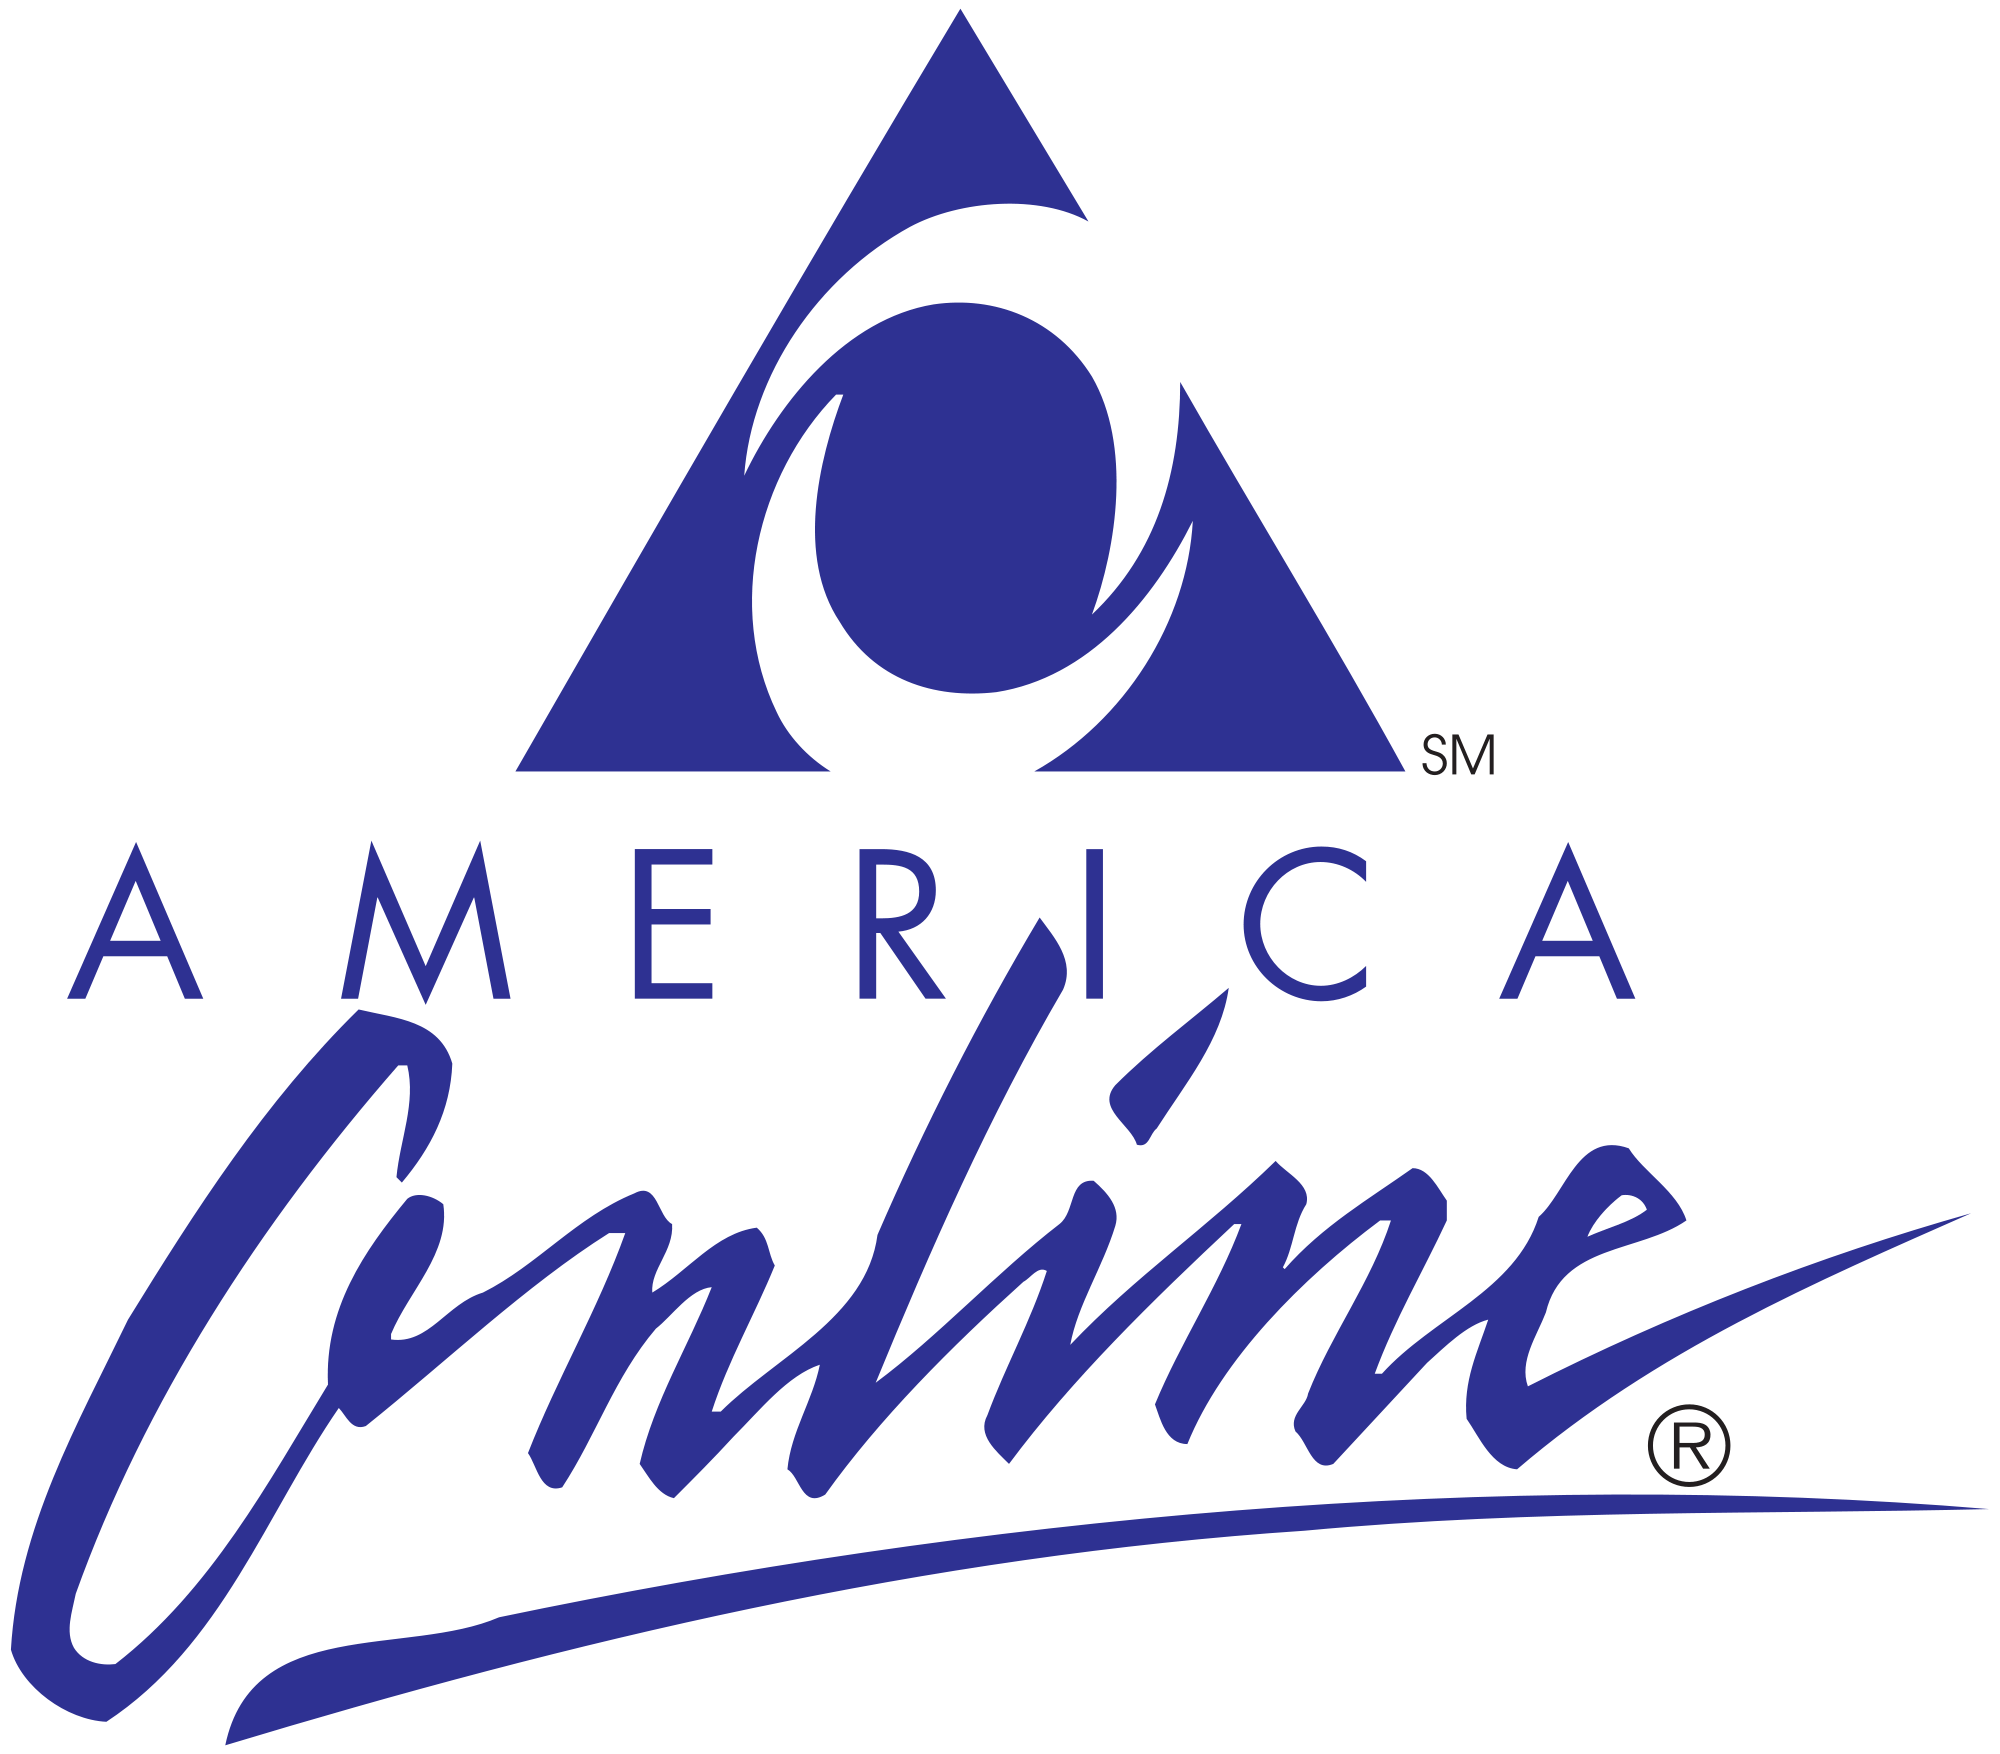 America Online Logo - File:America Online logo.svg - Wikimedia Commons